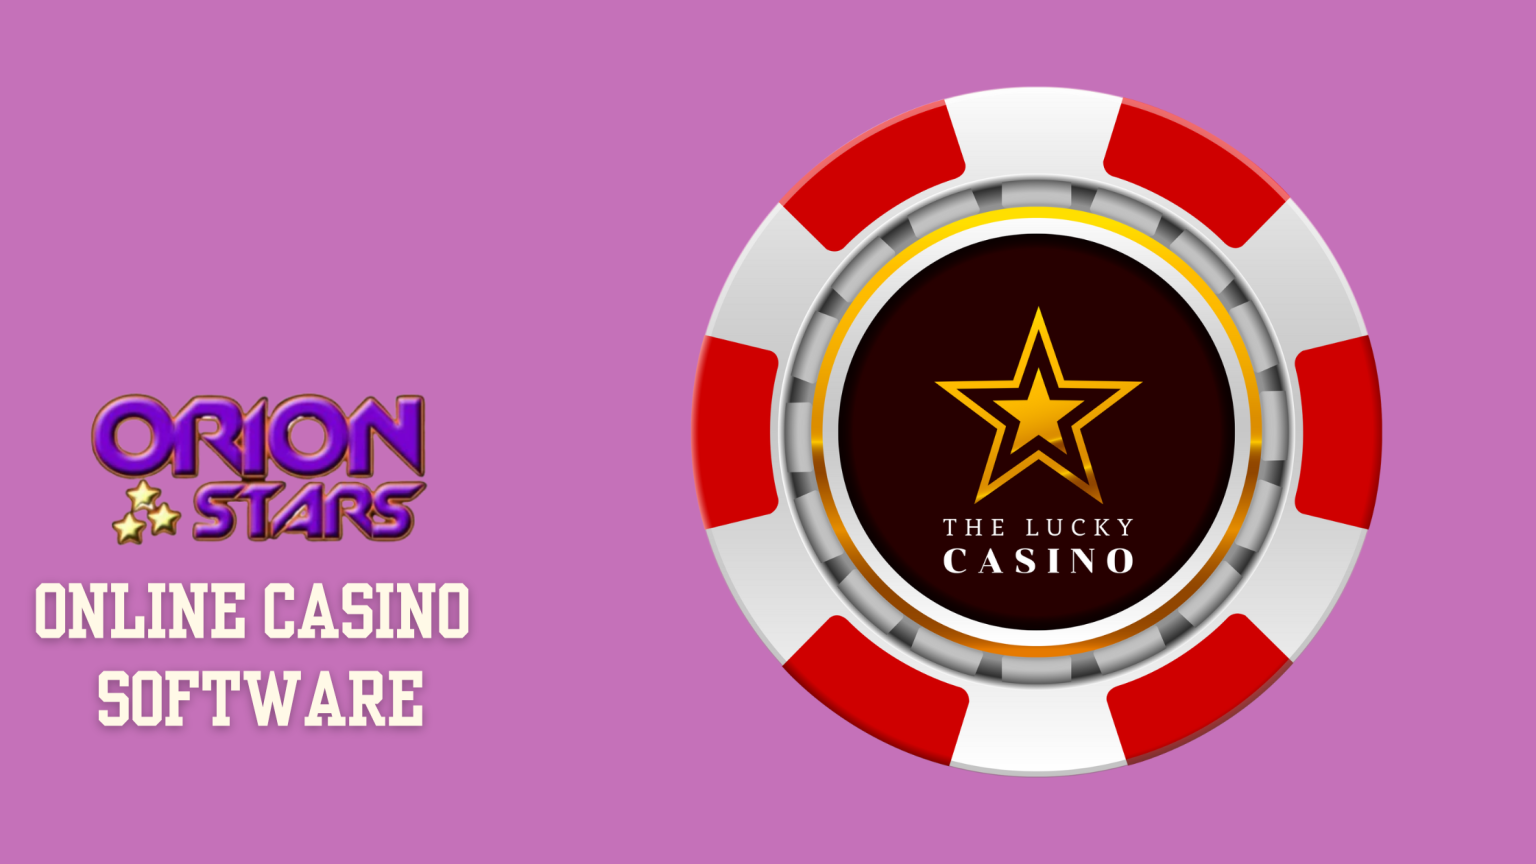 casino online games real money